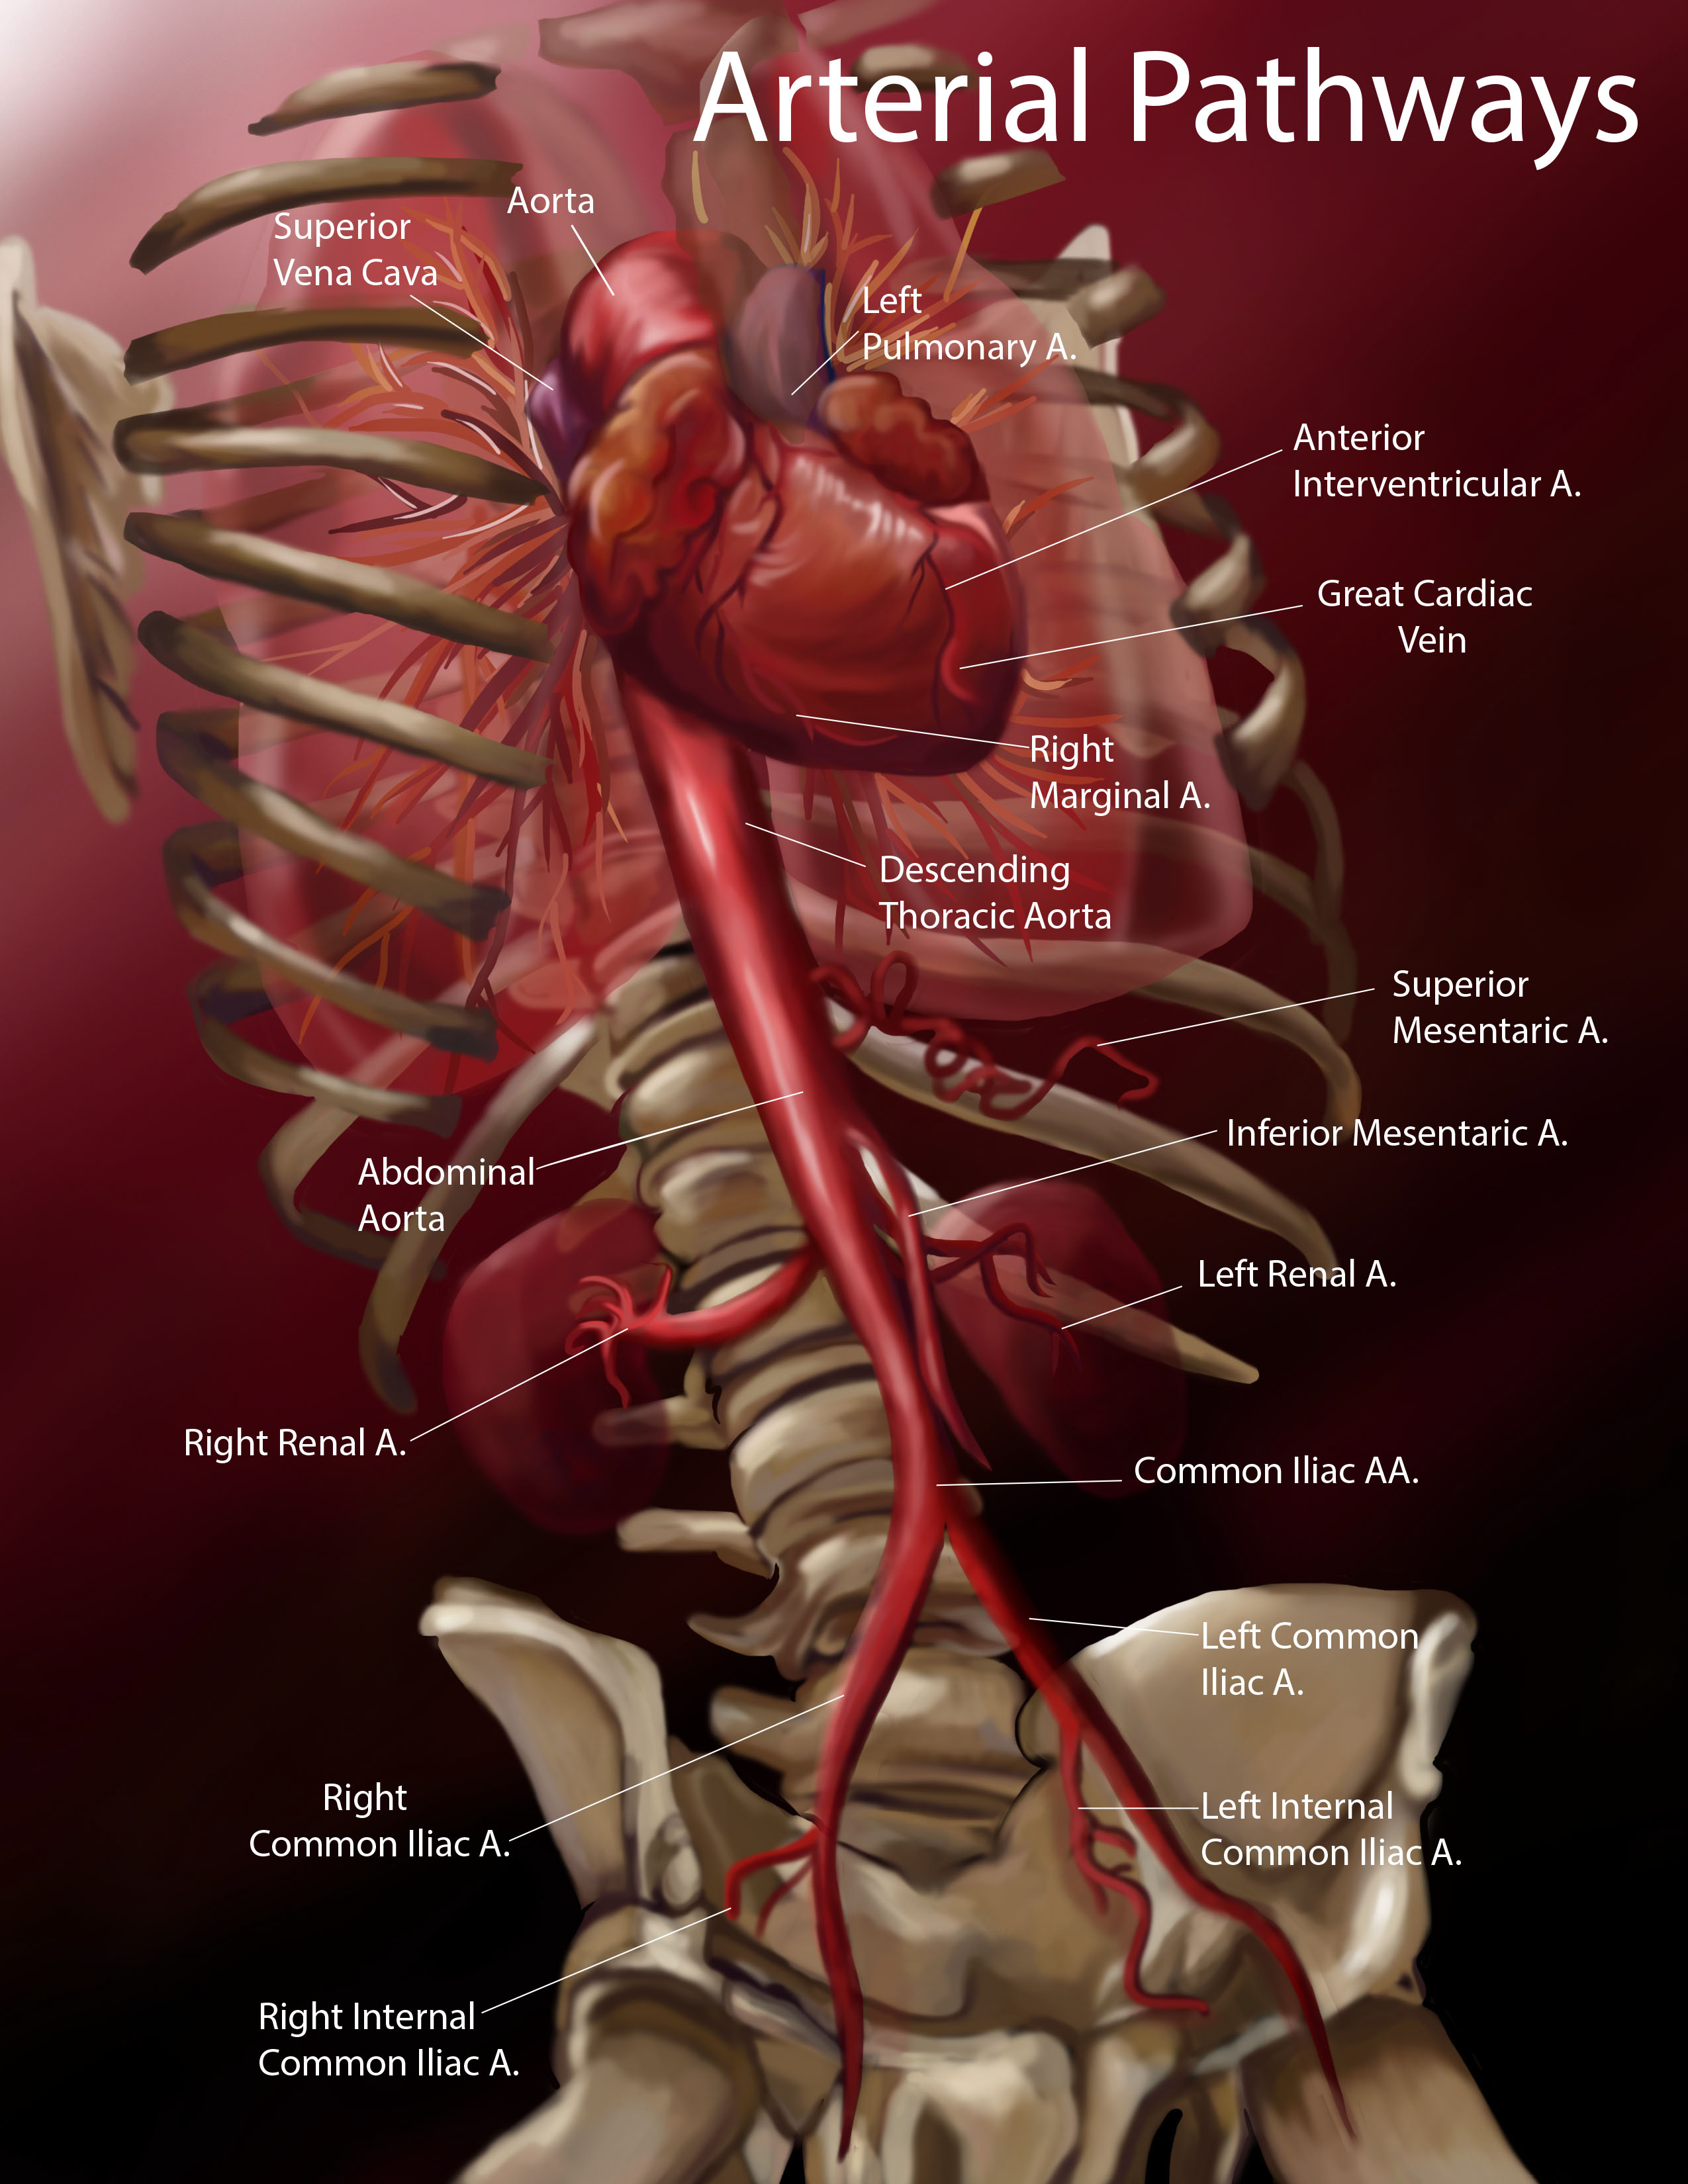 An illustration of arterial pathways.